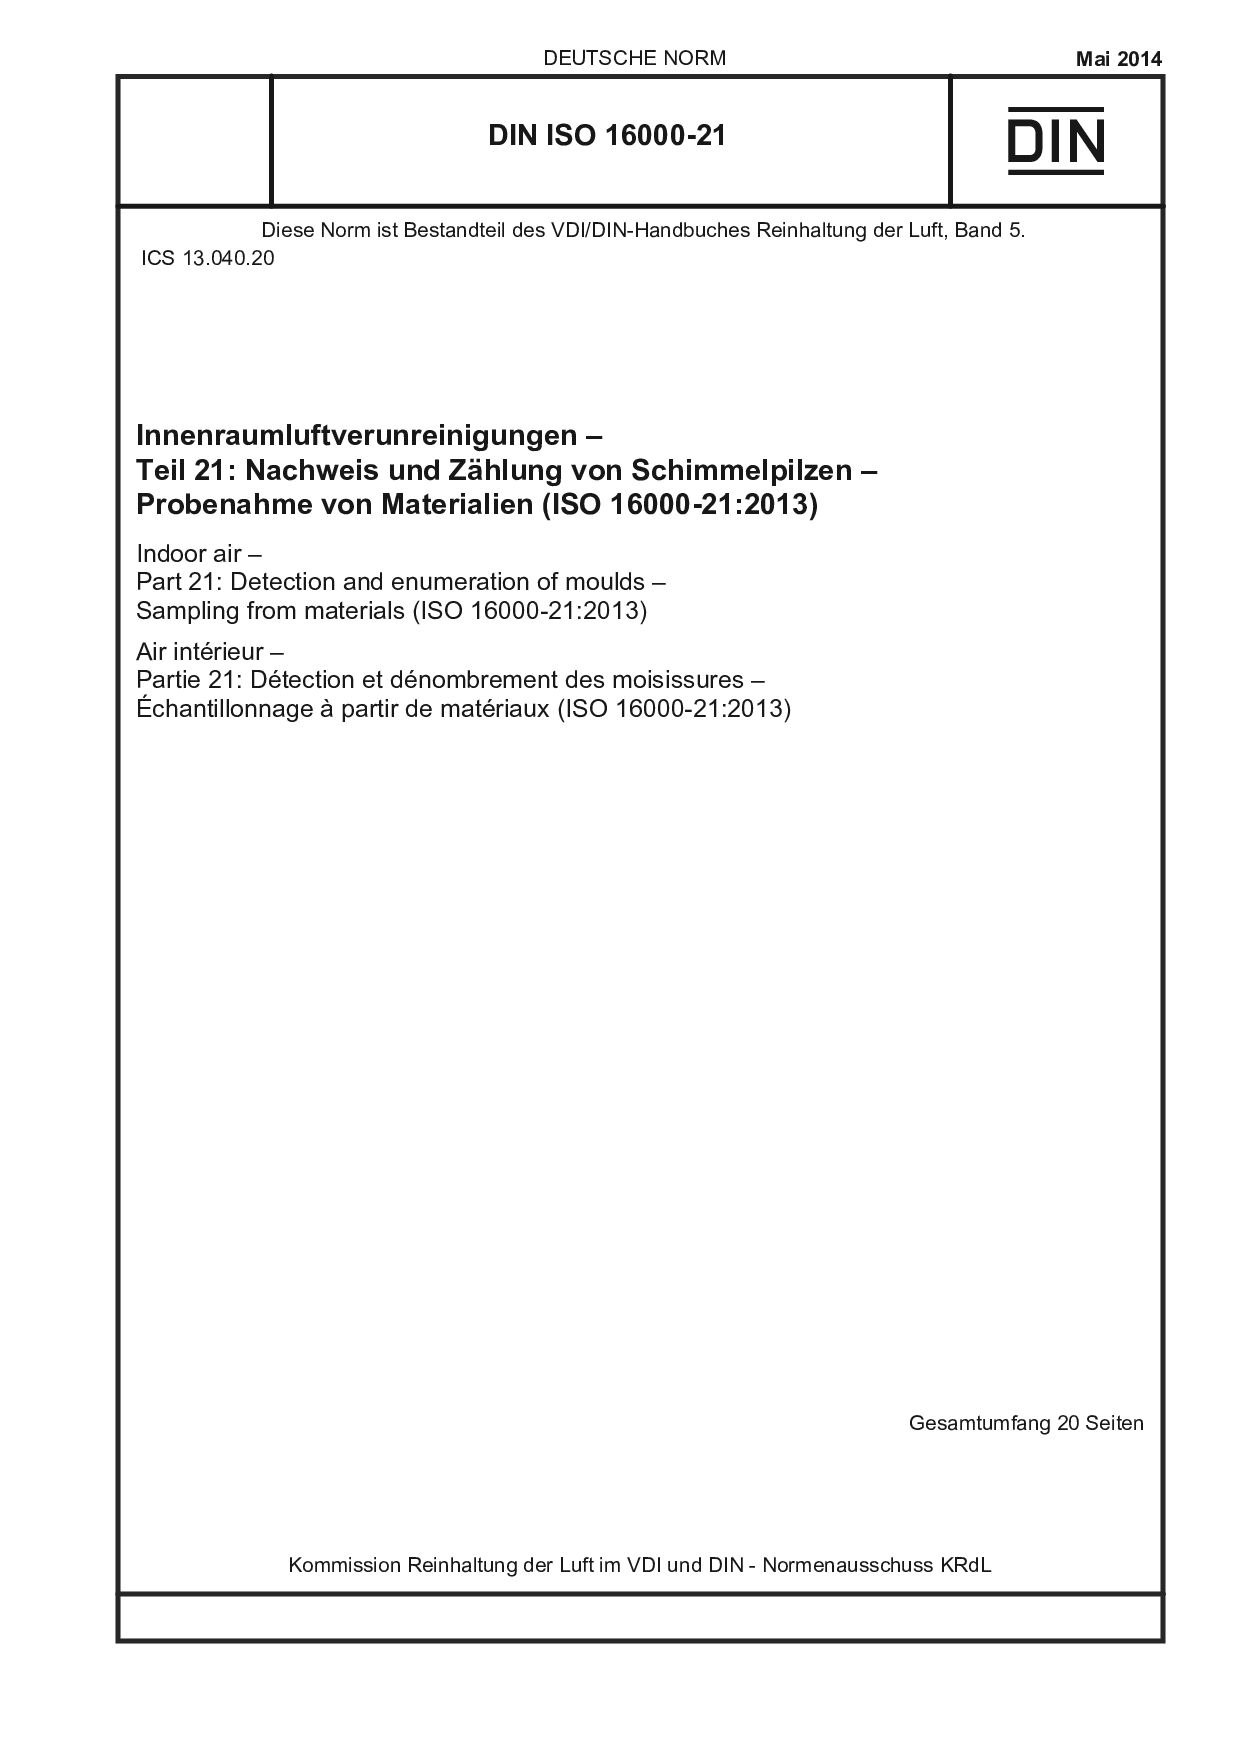 DIN ISO 16000-21:2014